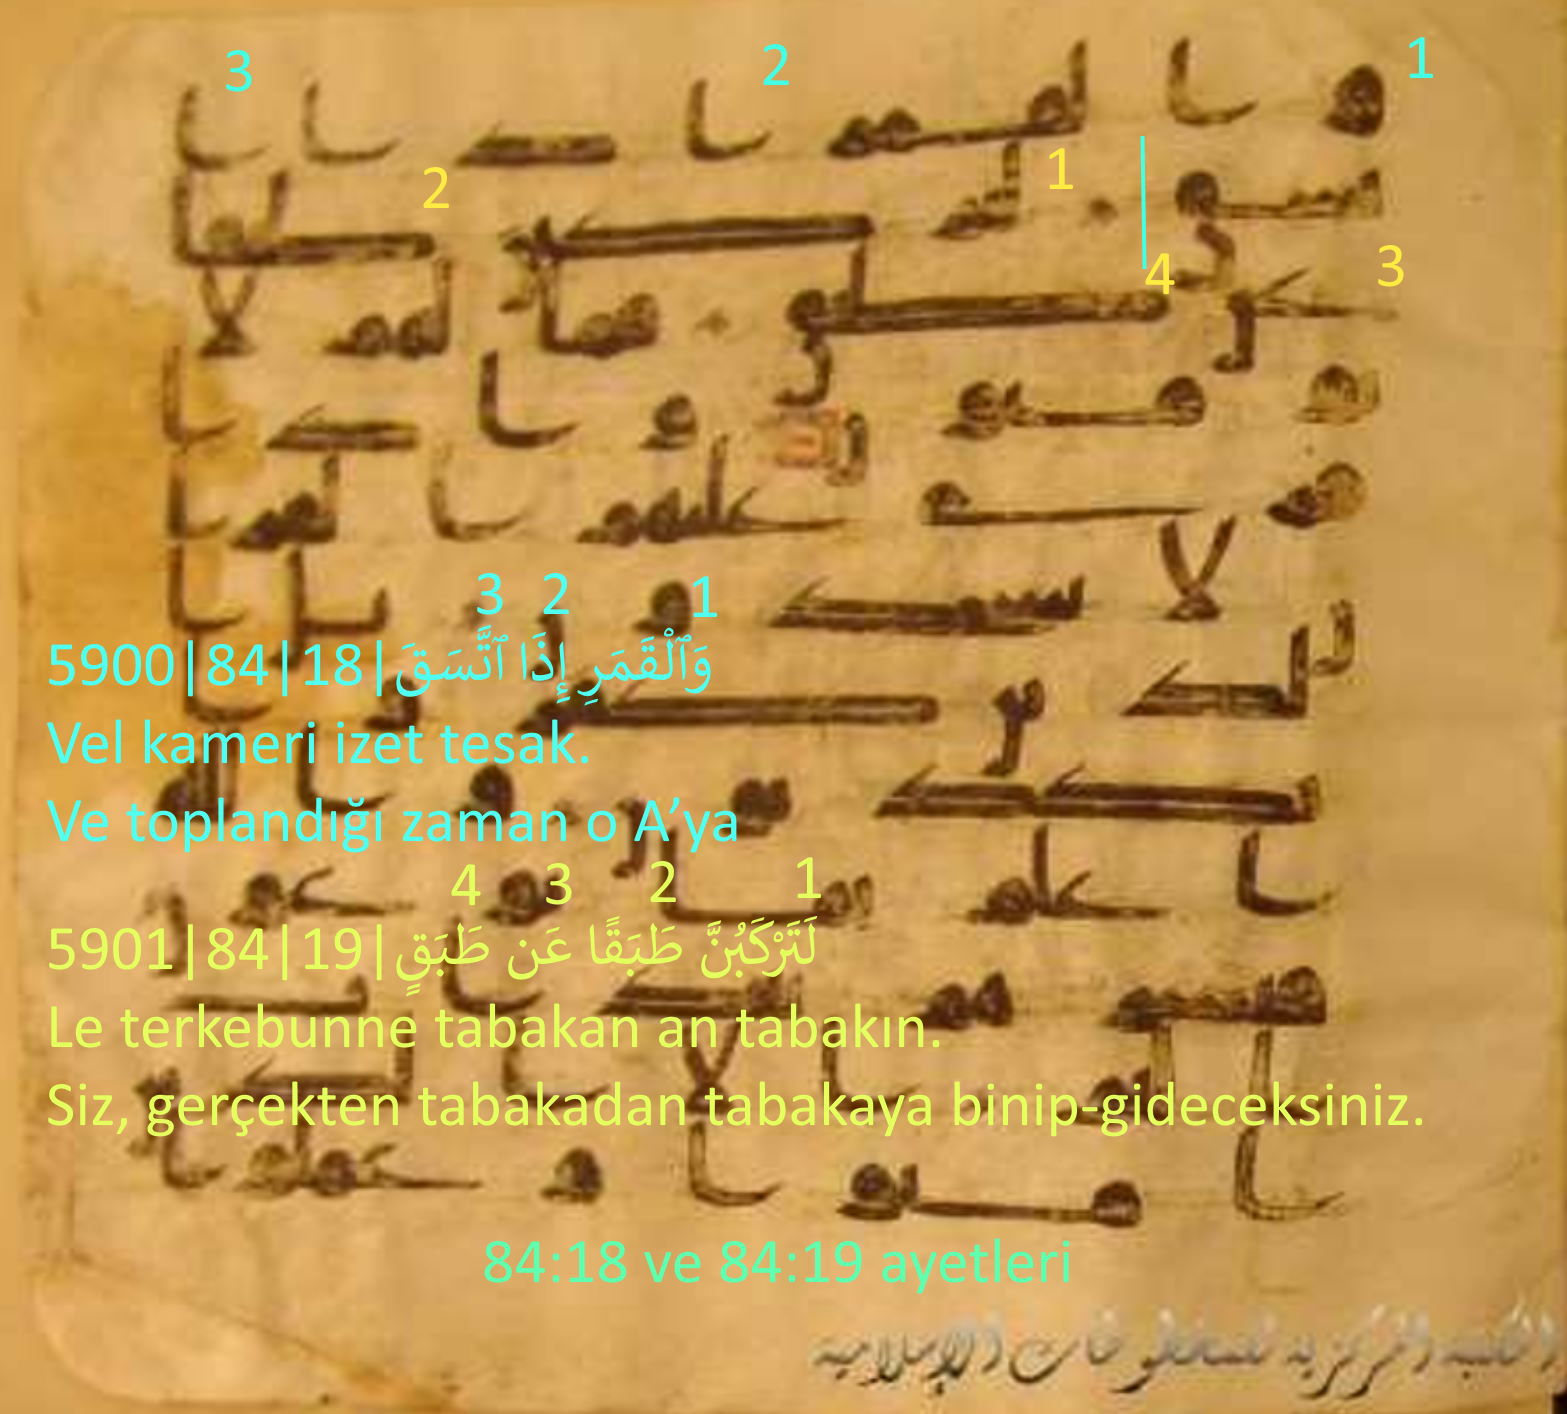 Kairo, al Maktaba al Markaziyya li l Maḫṭūṭāt al Islāmiyya Großer Korankodex aya gidis eski mushaf editli